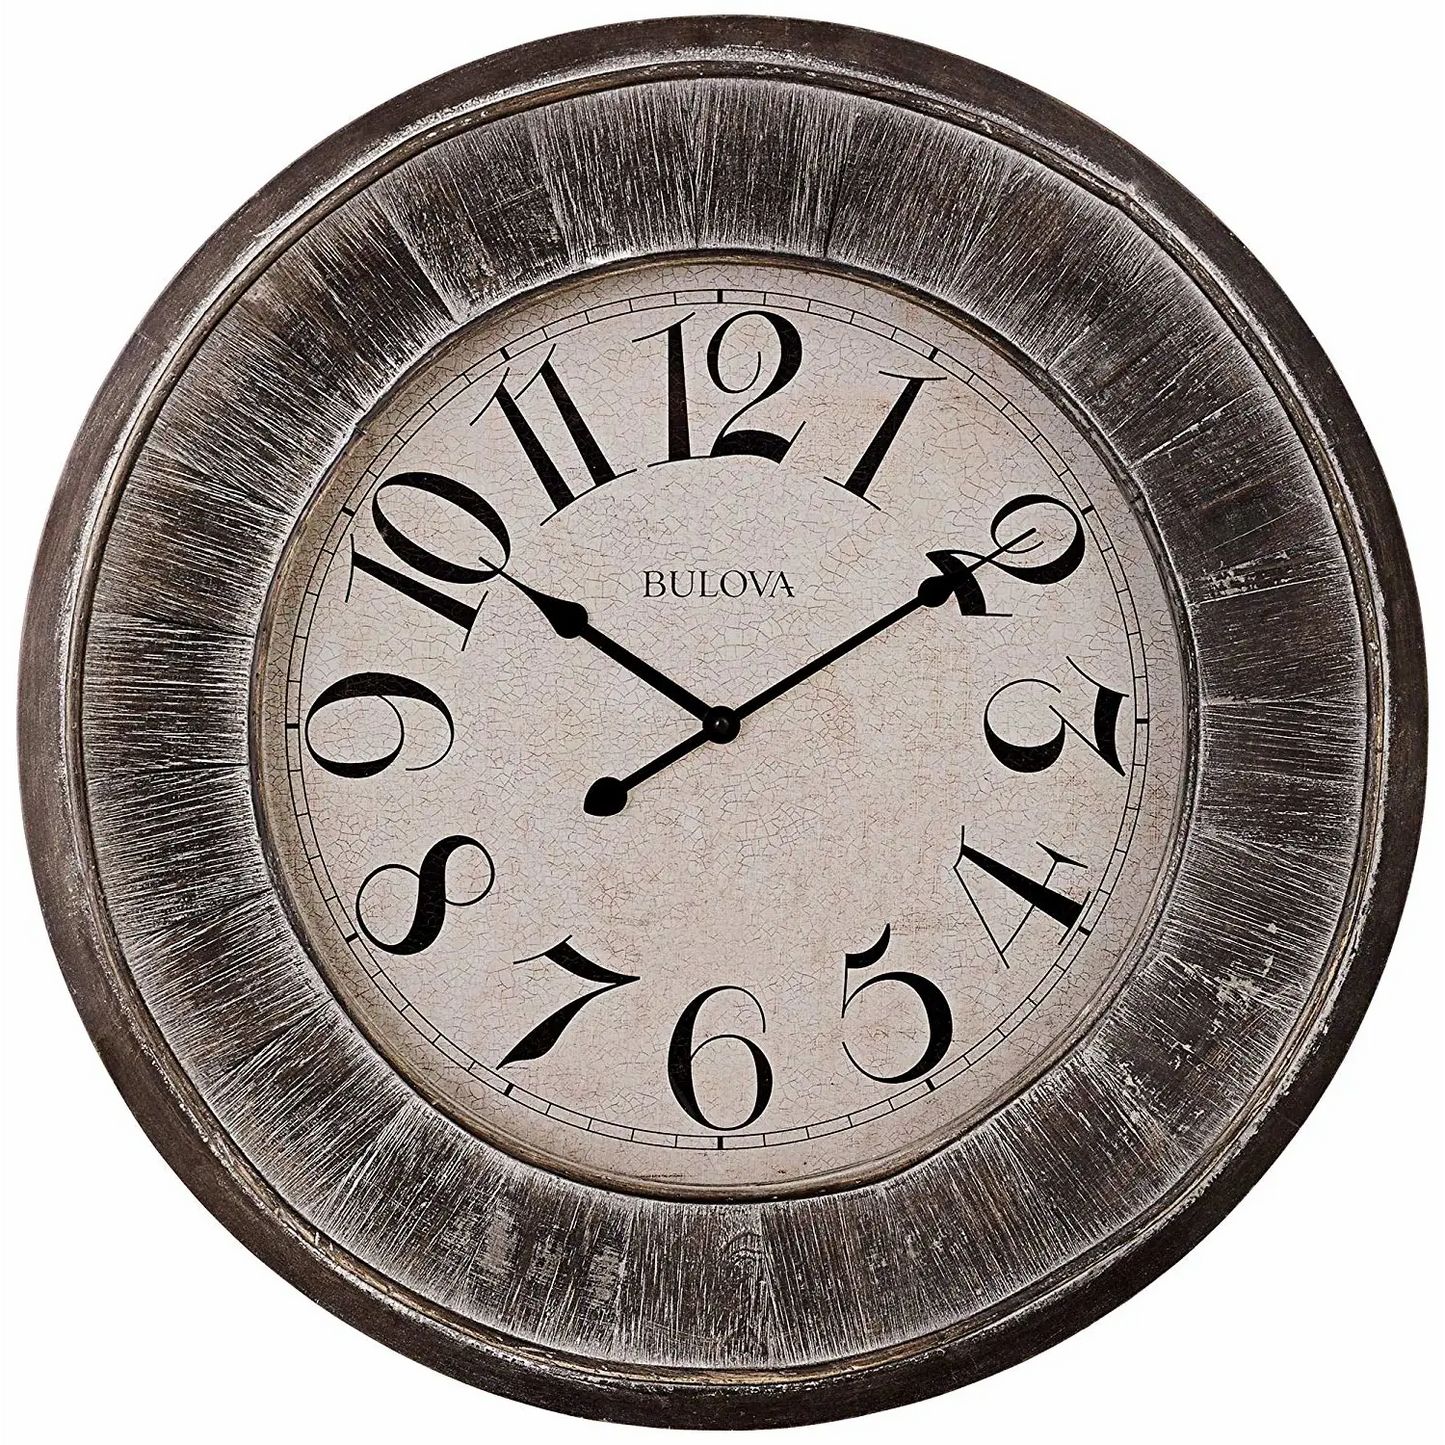 Bulova Restoration Grey Weathered Finish Wall Clock C4840 -